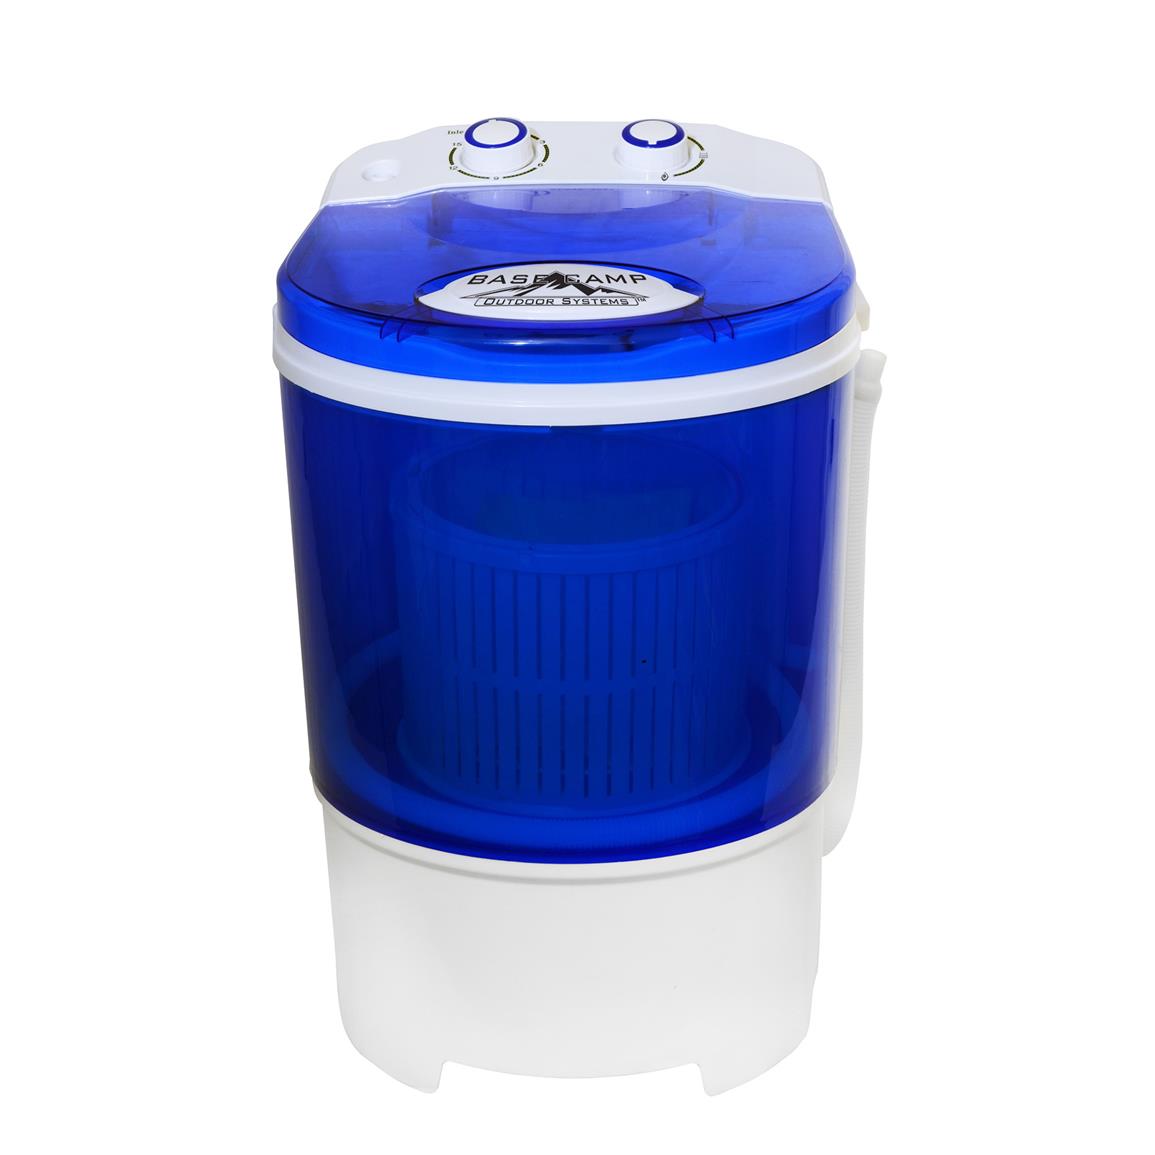 Mr Heater Portable Single Tub Washing Machine 653072